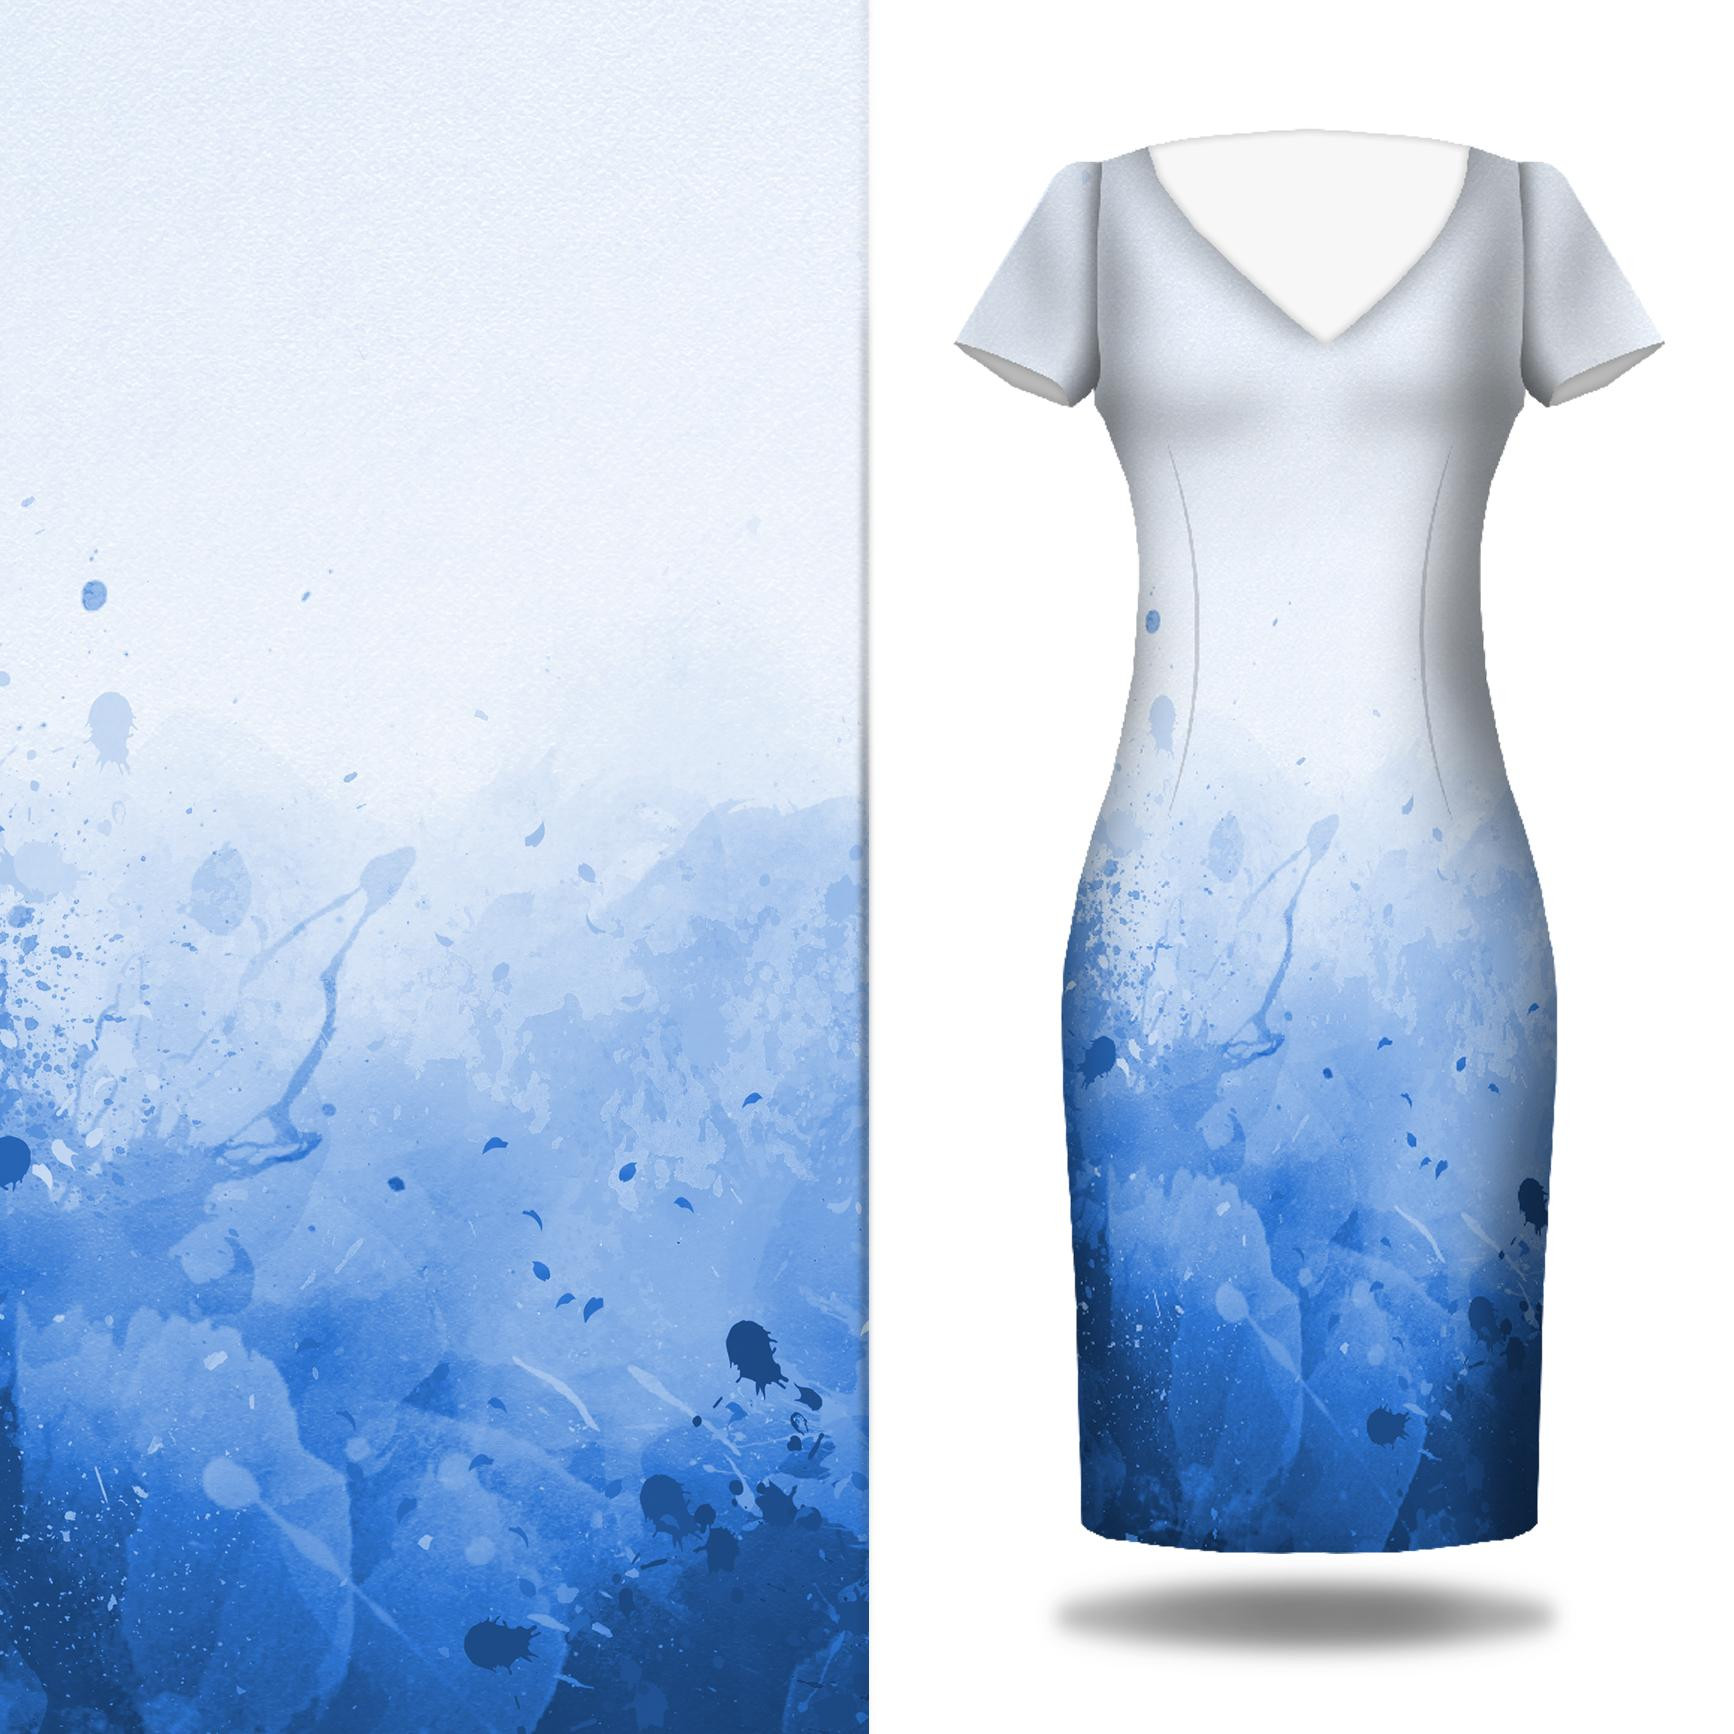 SKVRNY (classic blue) - panel pro šaty TE210